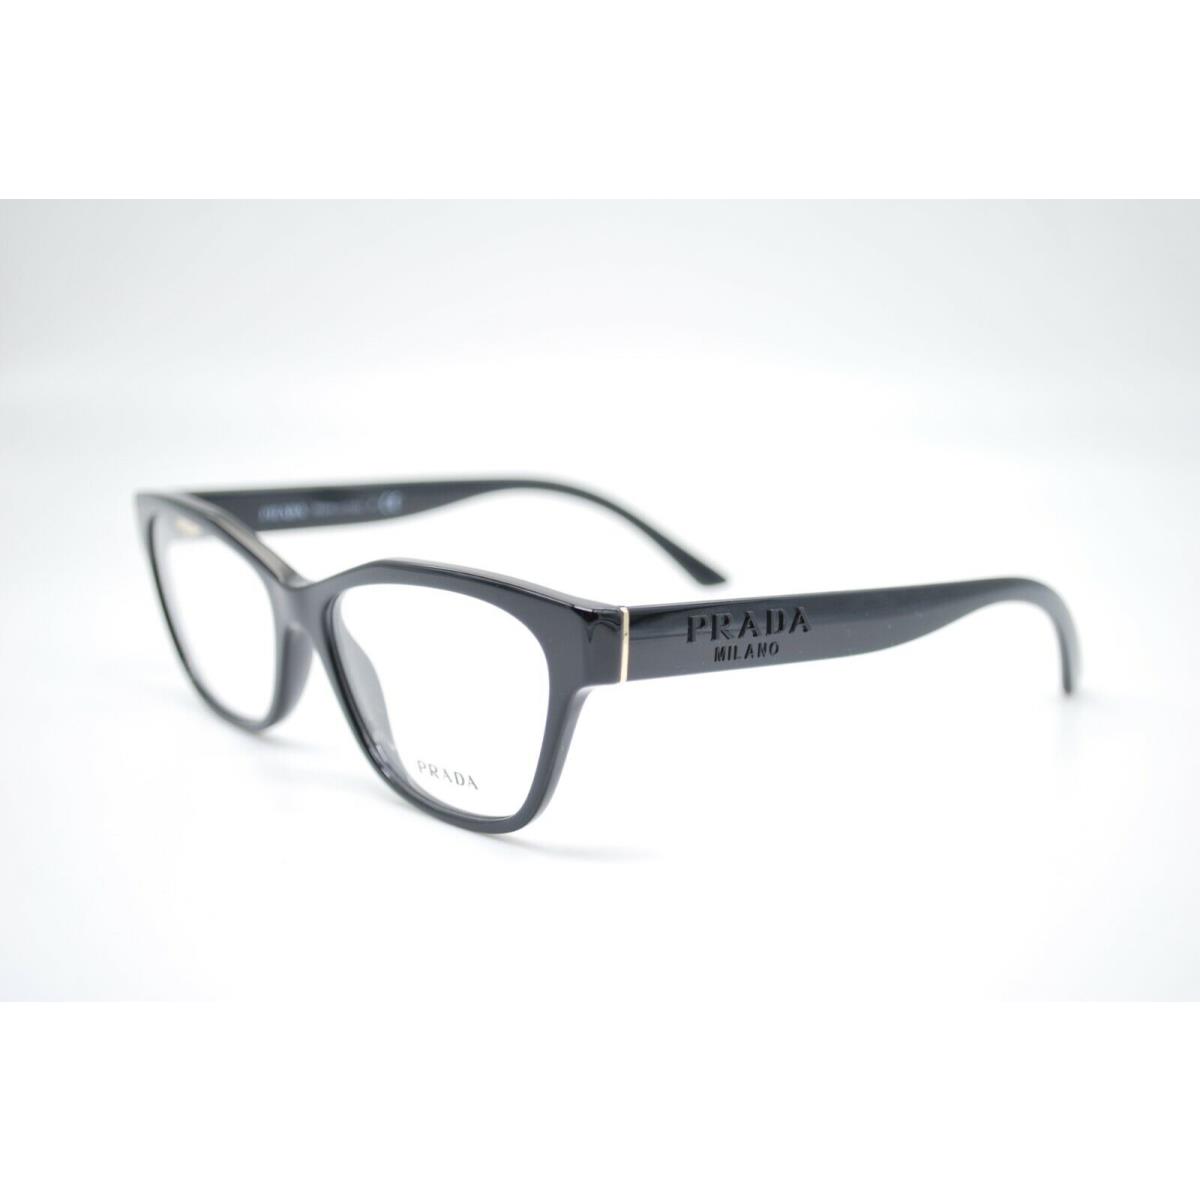 Prada eyeglasses VPR - Frame: Black 0